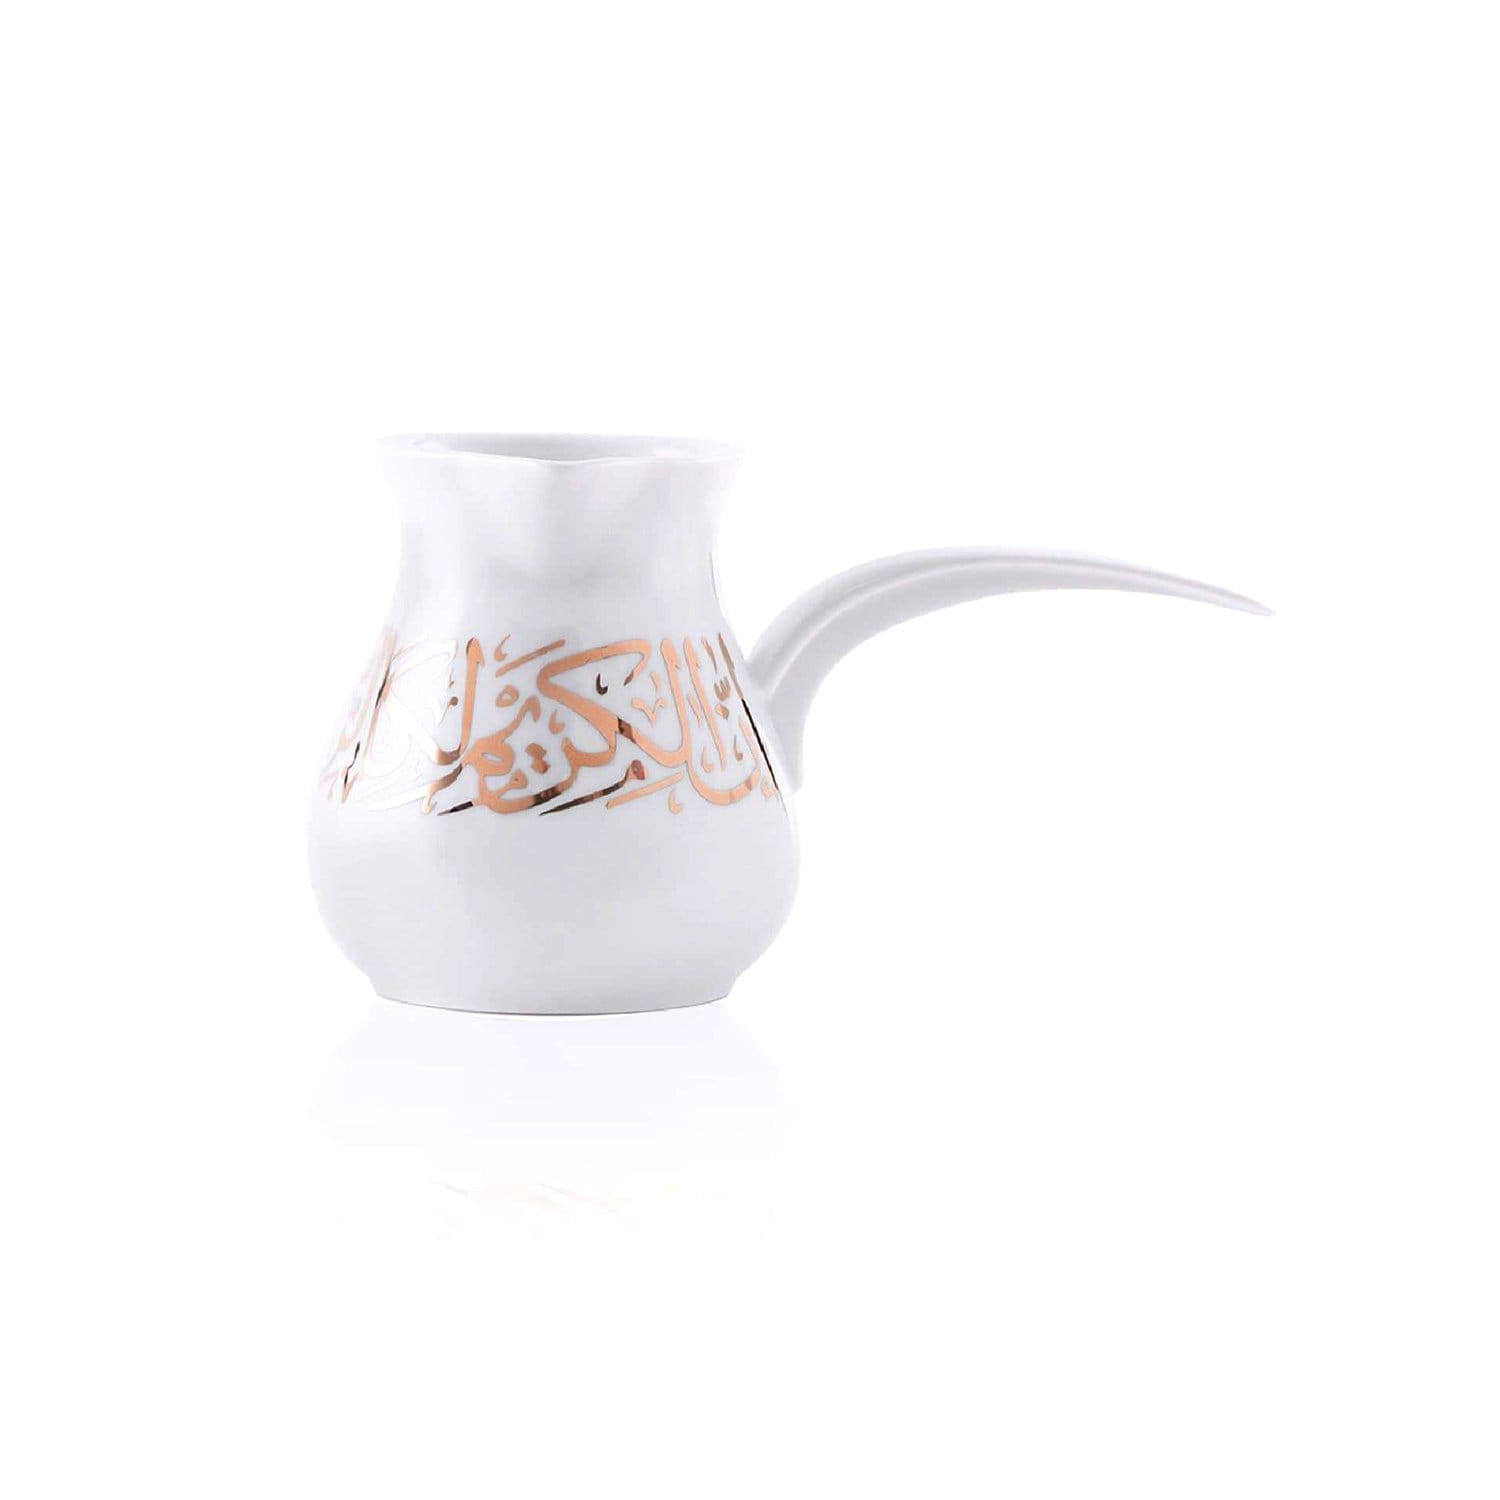 Dimlaj Kareem Large Coffee Pot - White and Gold - 46668 - Jashanmal Home